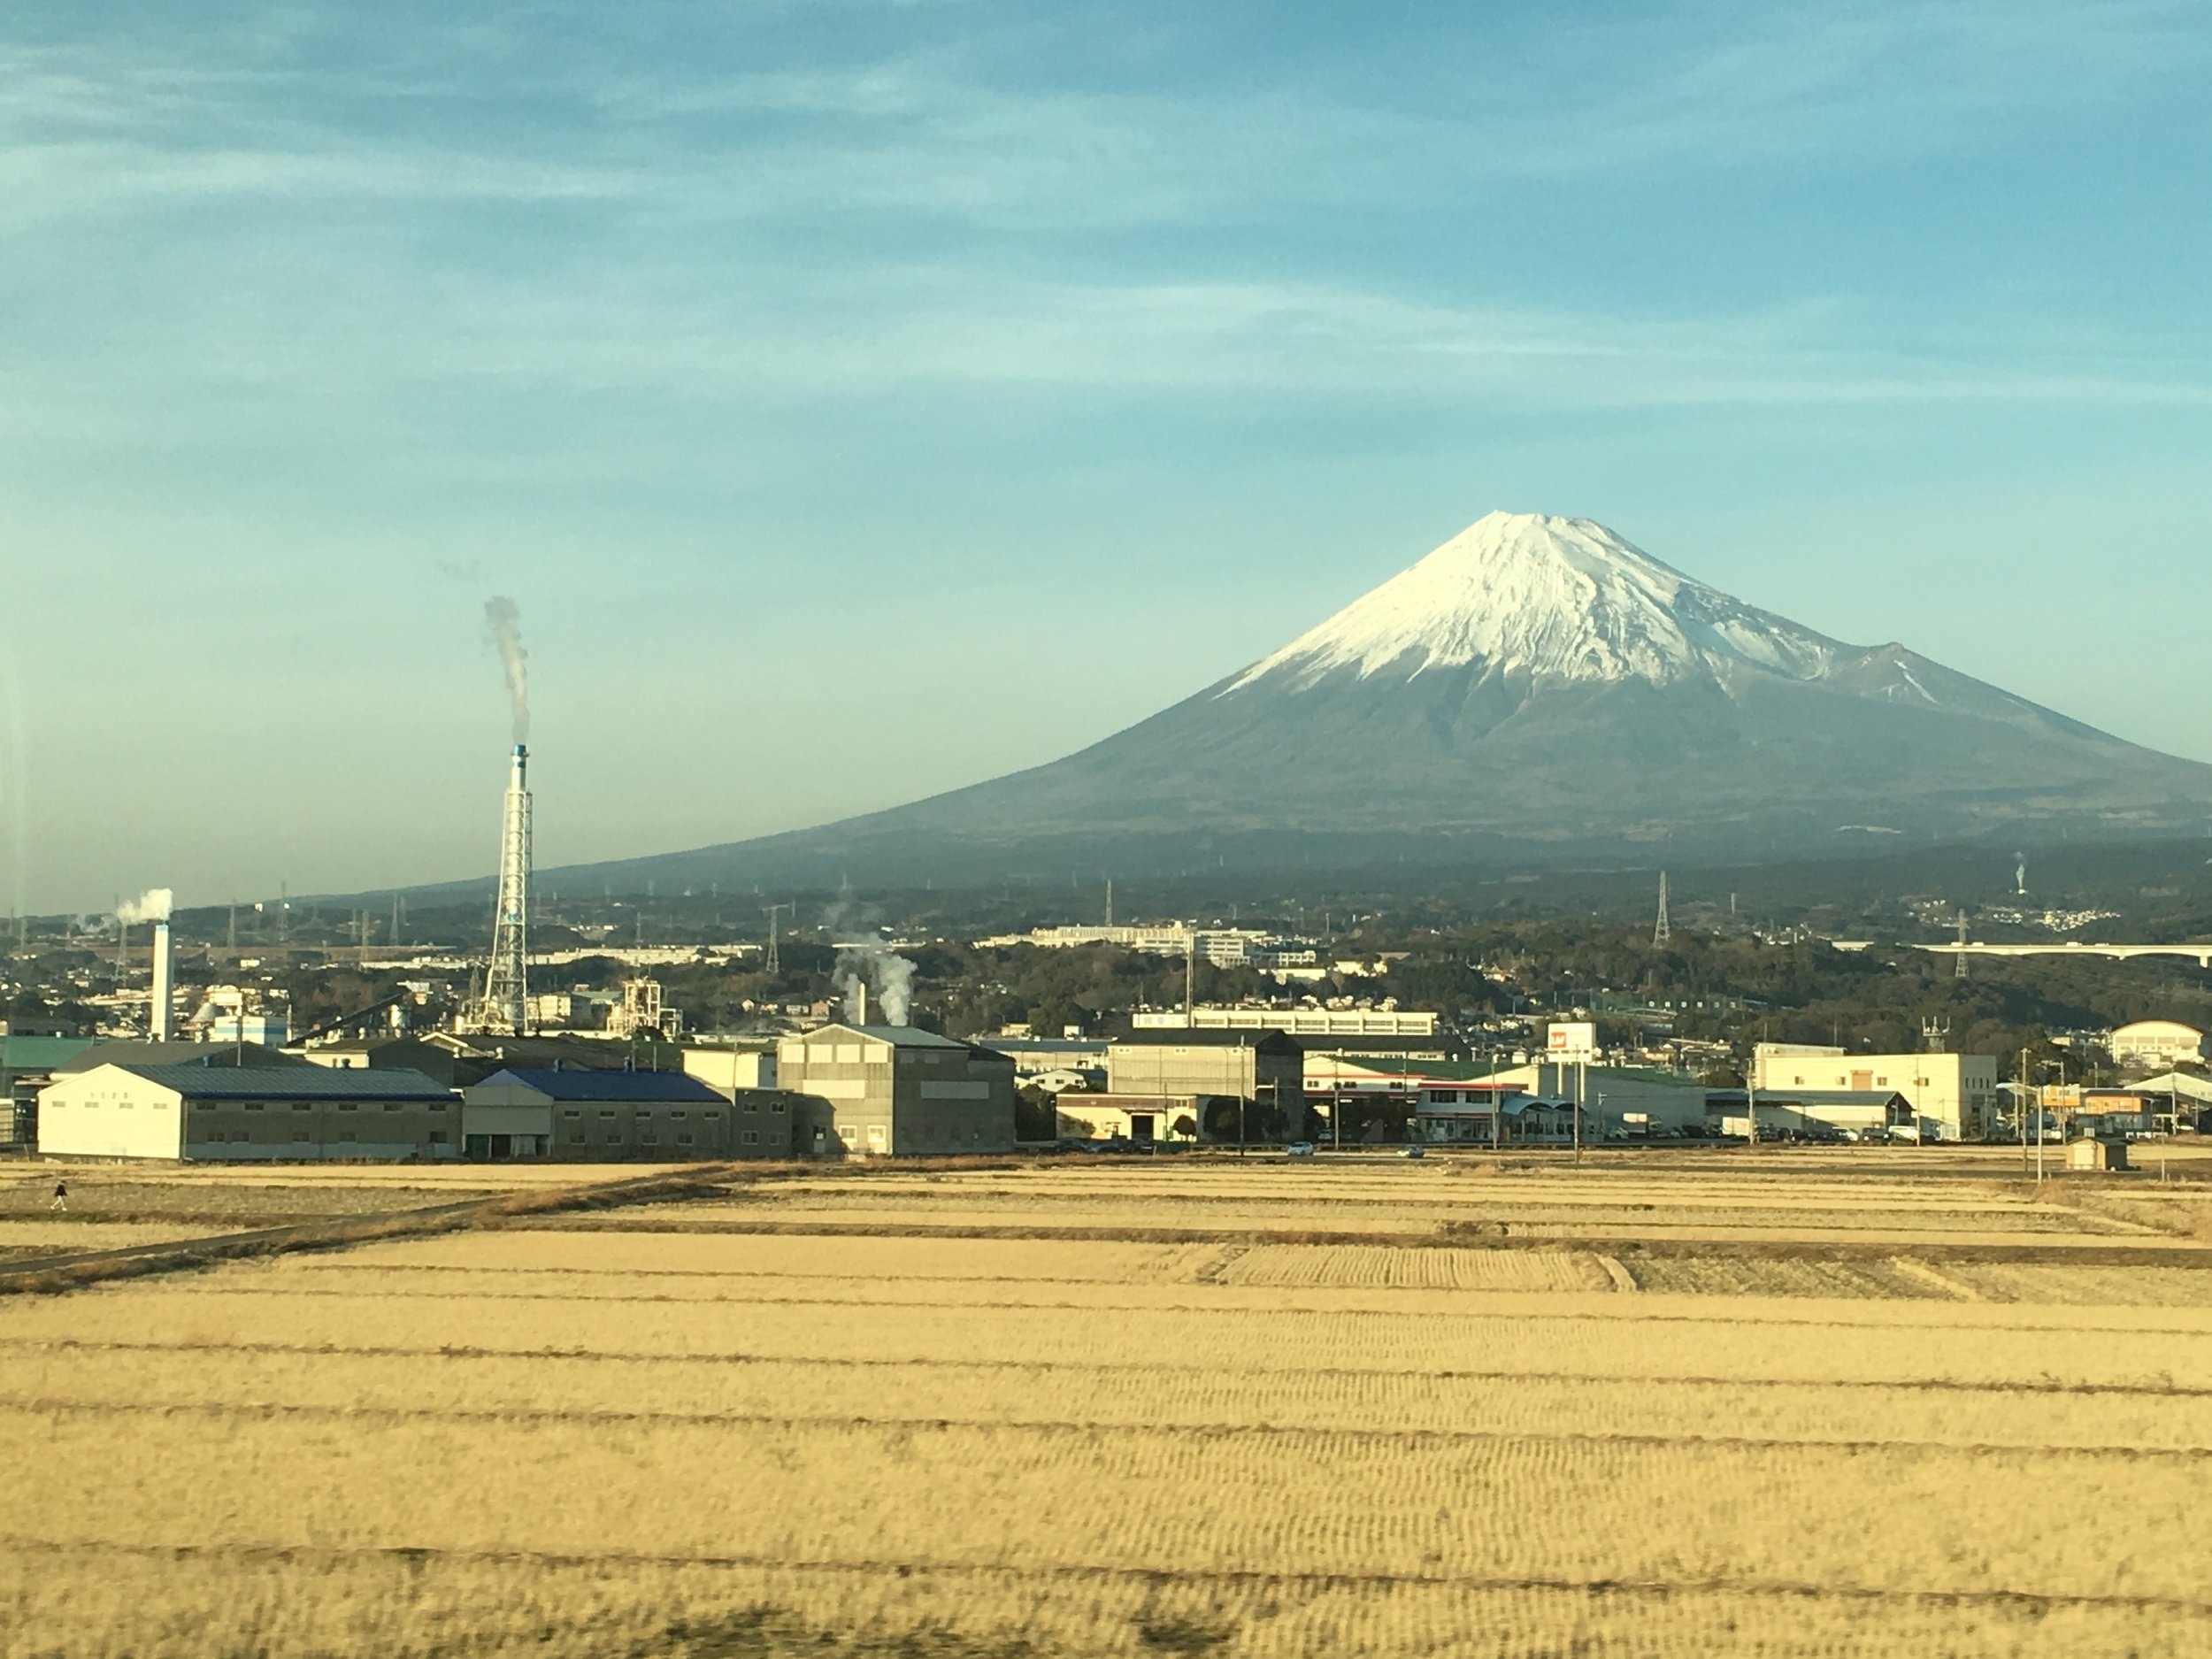  Mount Fuji, Japan 